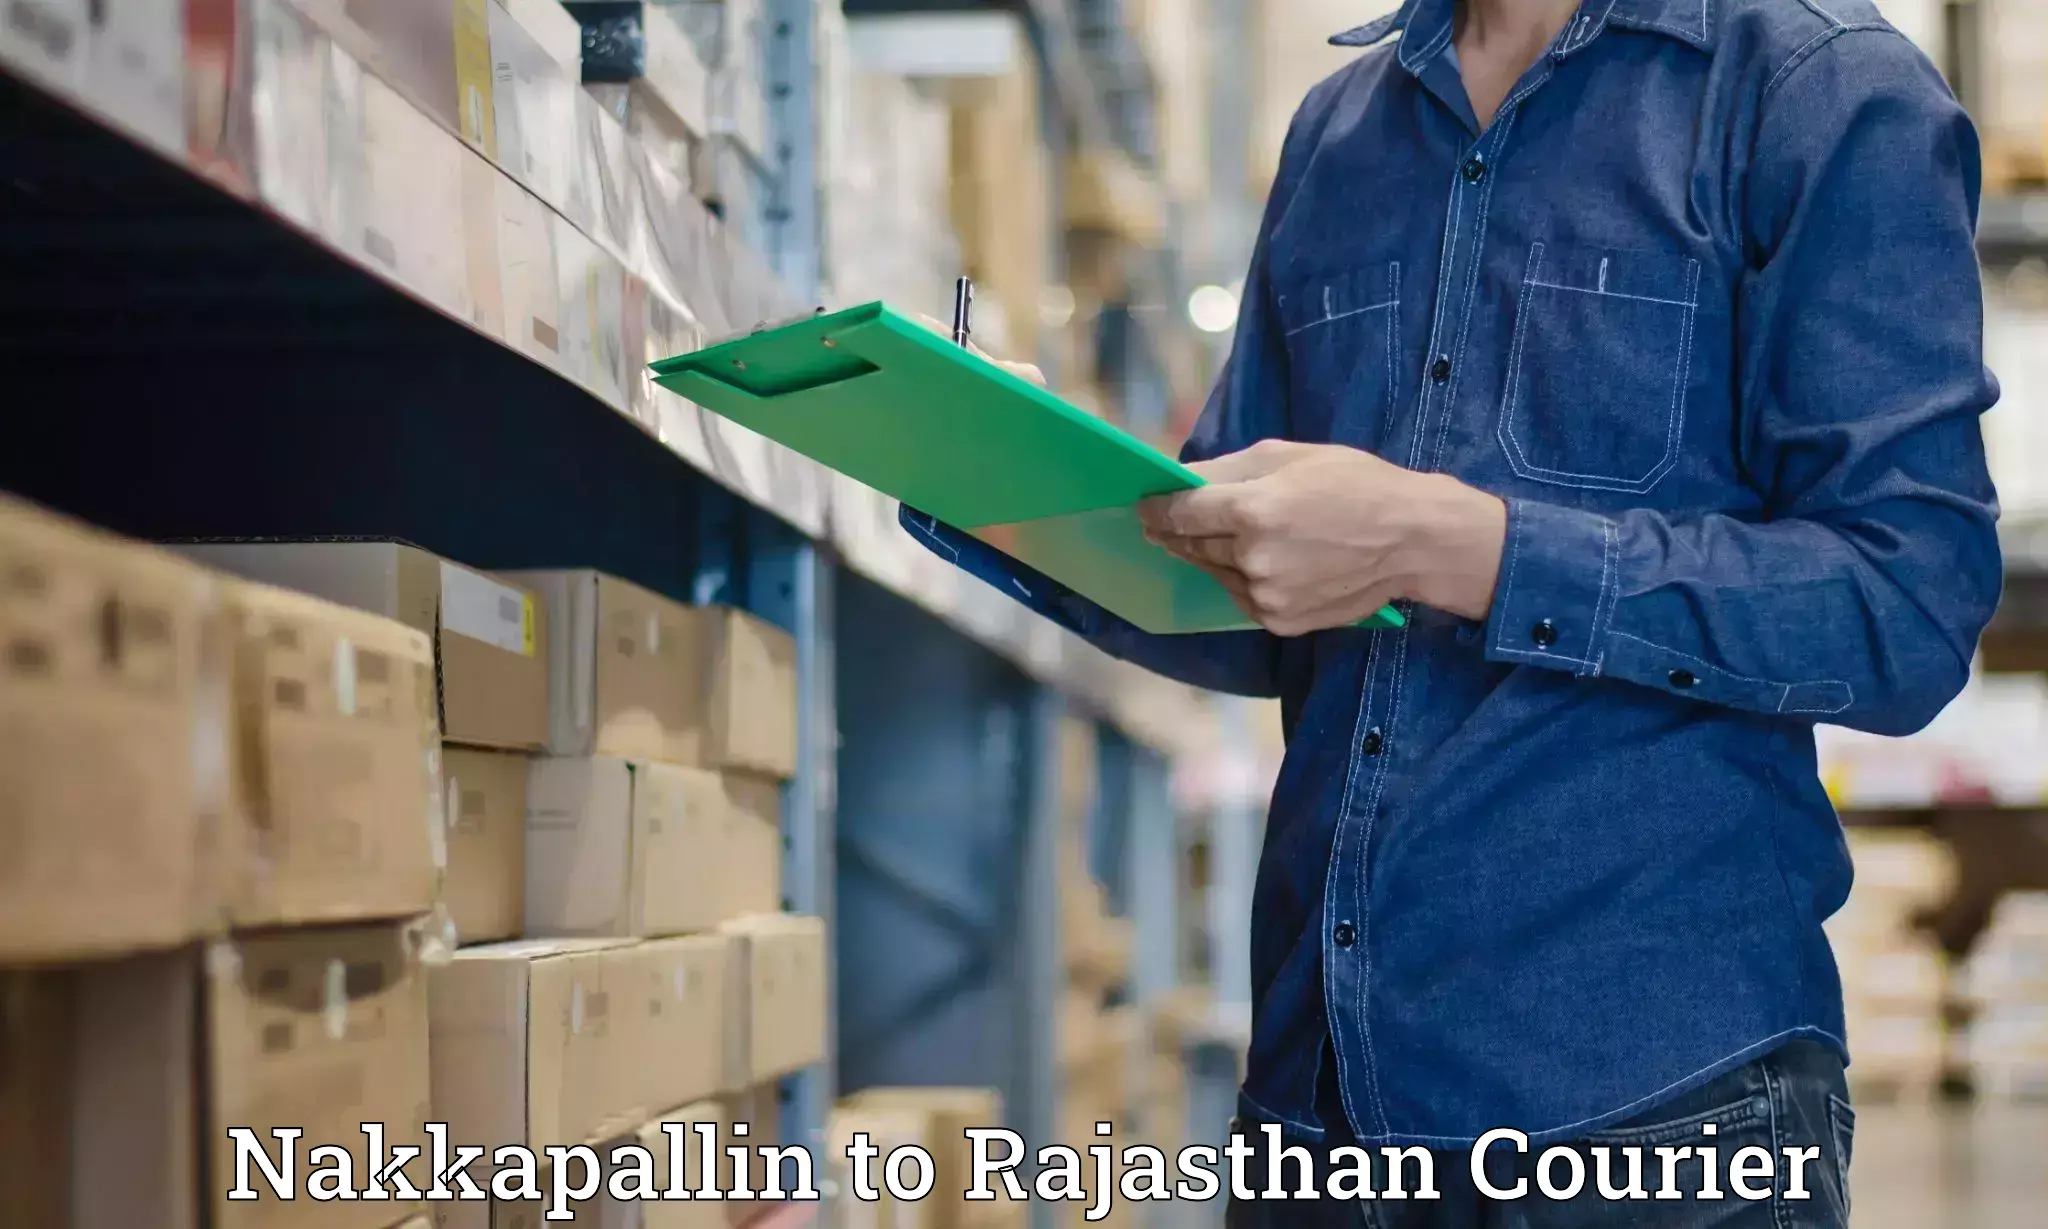 Professional courier handling Nakkapallin to Khanpur